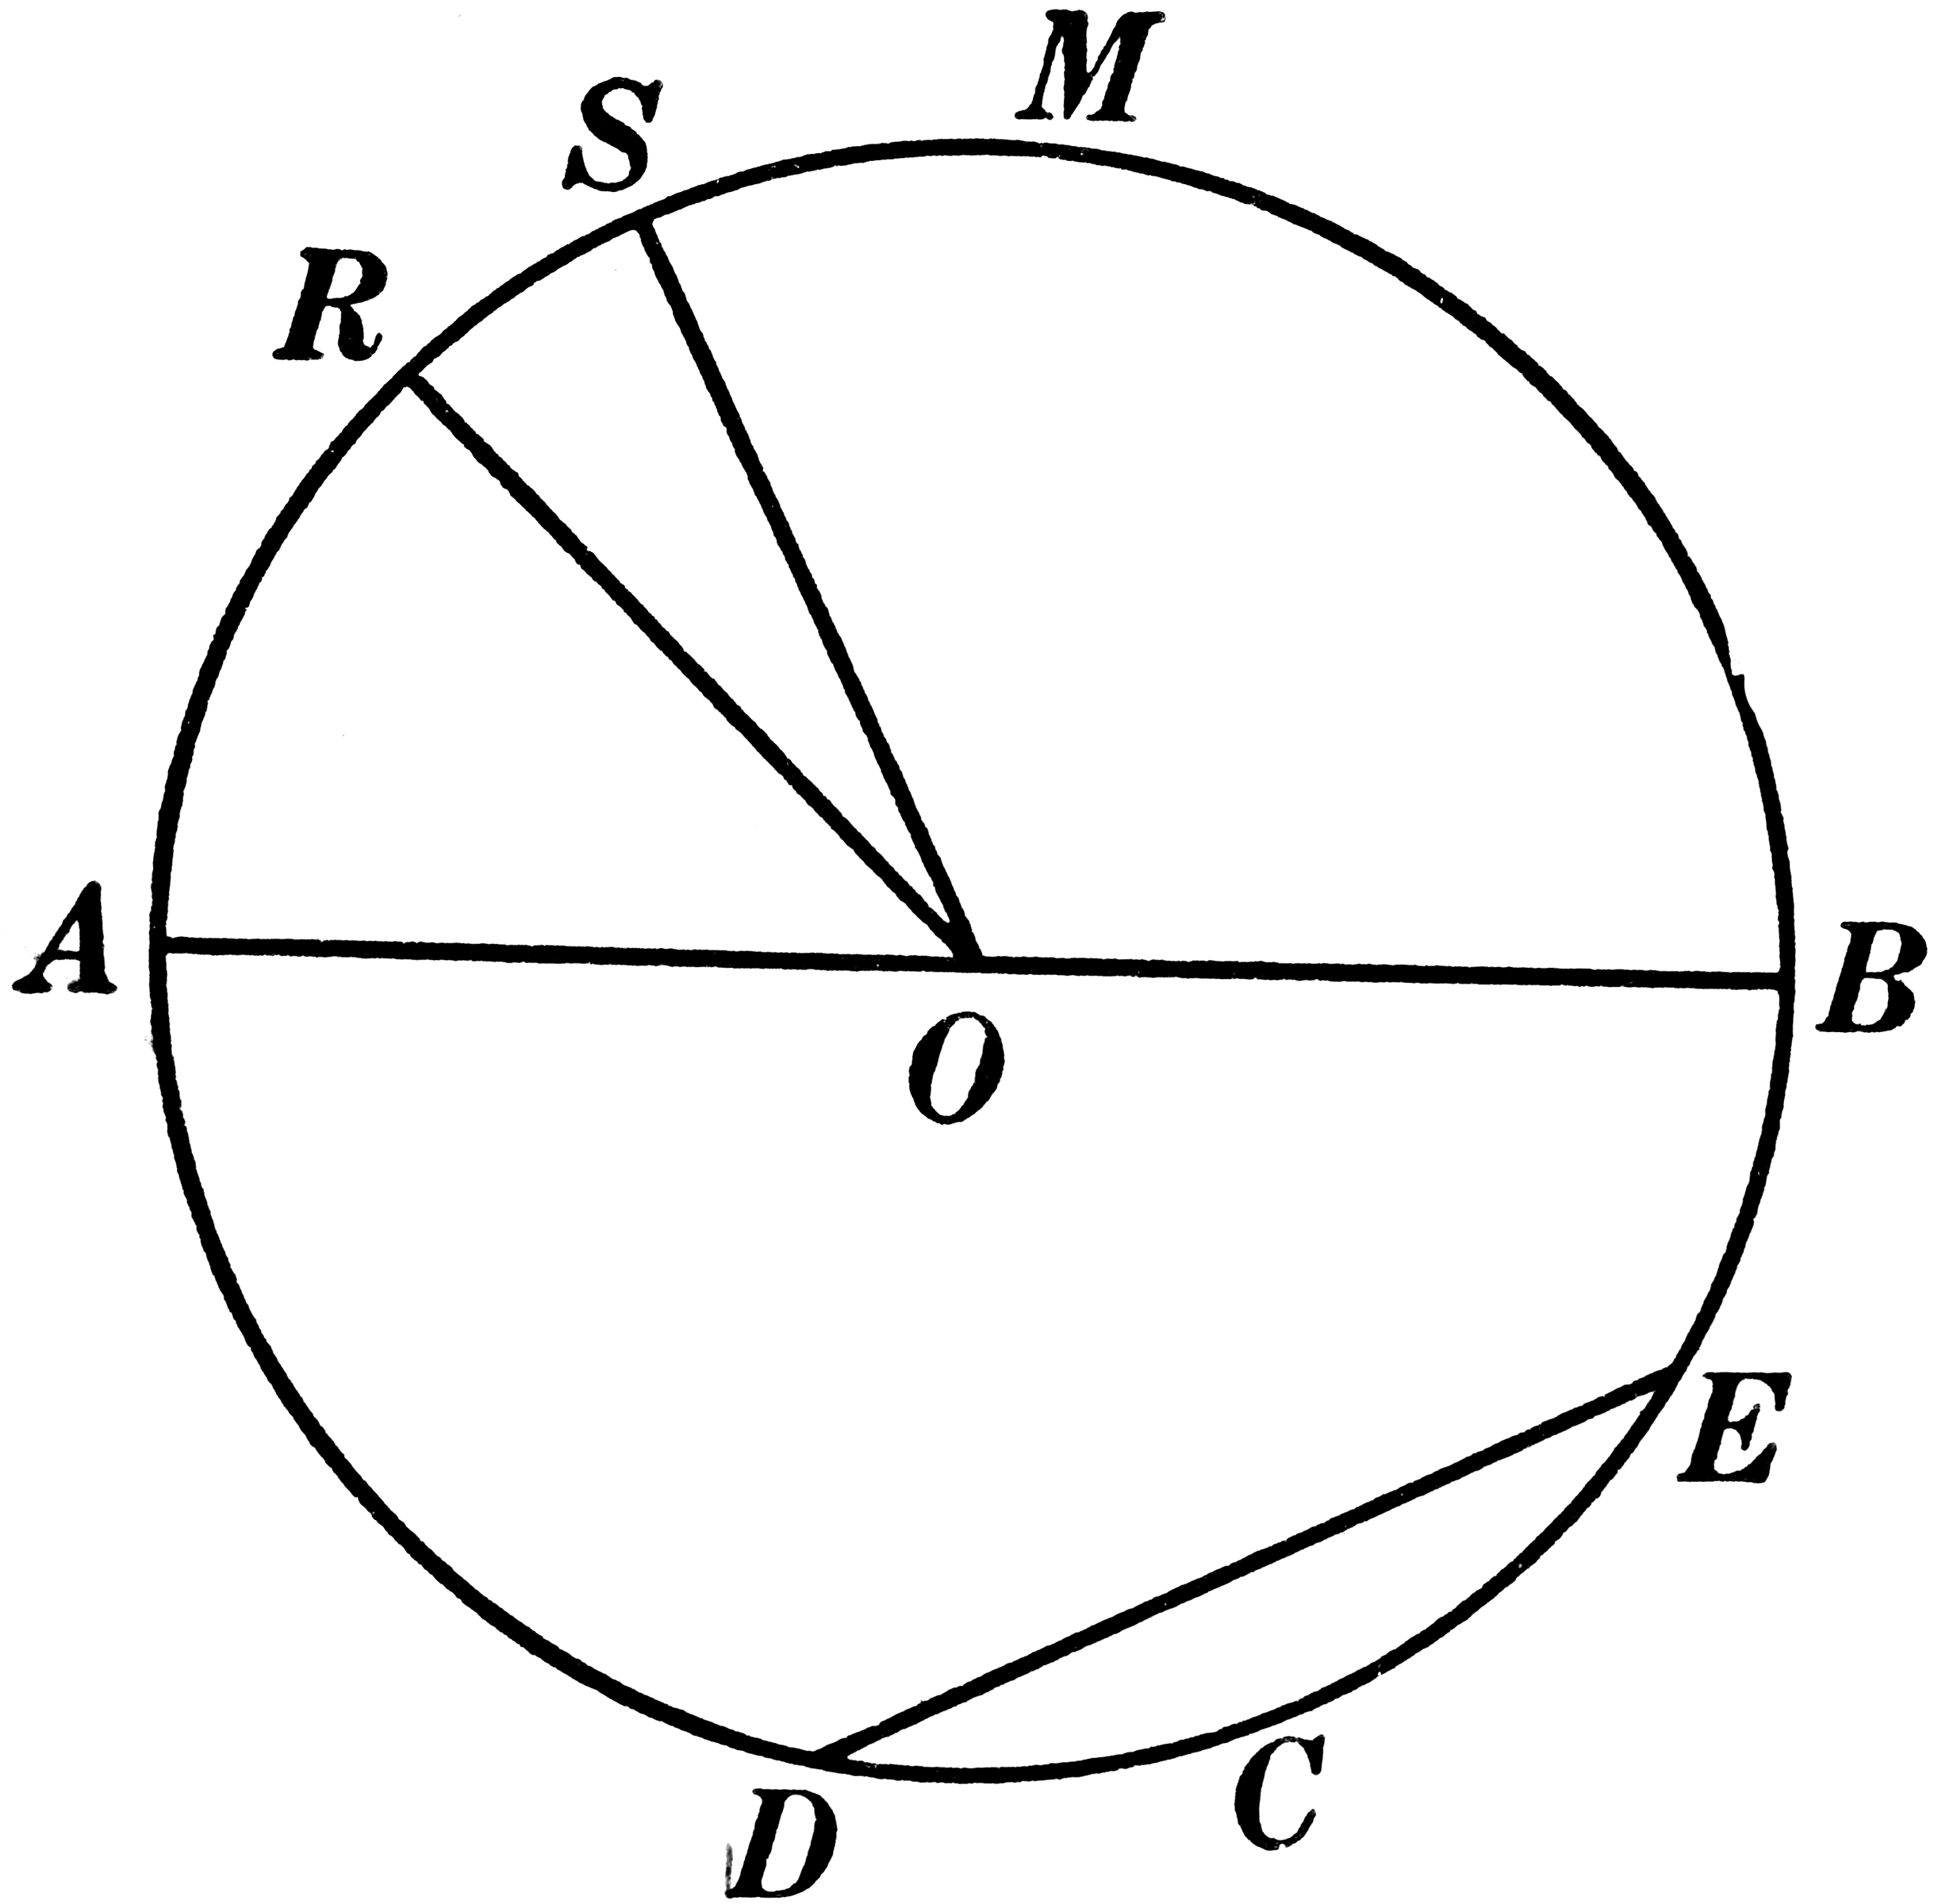 Circle radius. Окружность. Элементы окружности и круга. Окружность и ее элементы. Окружность геометрия.